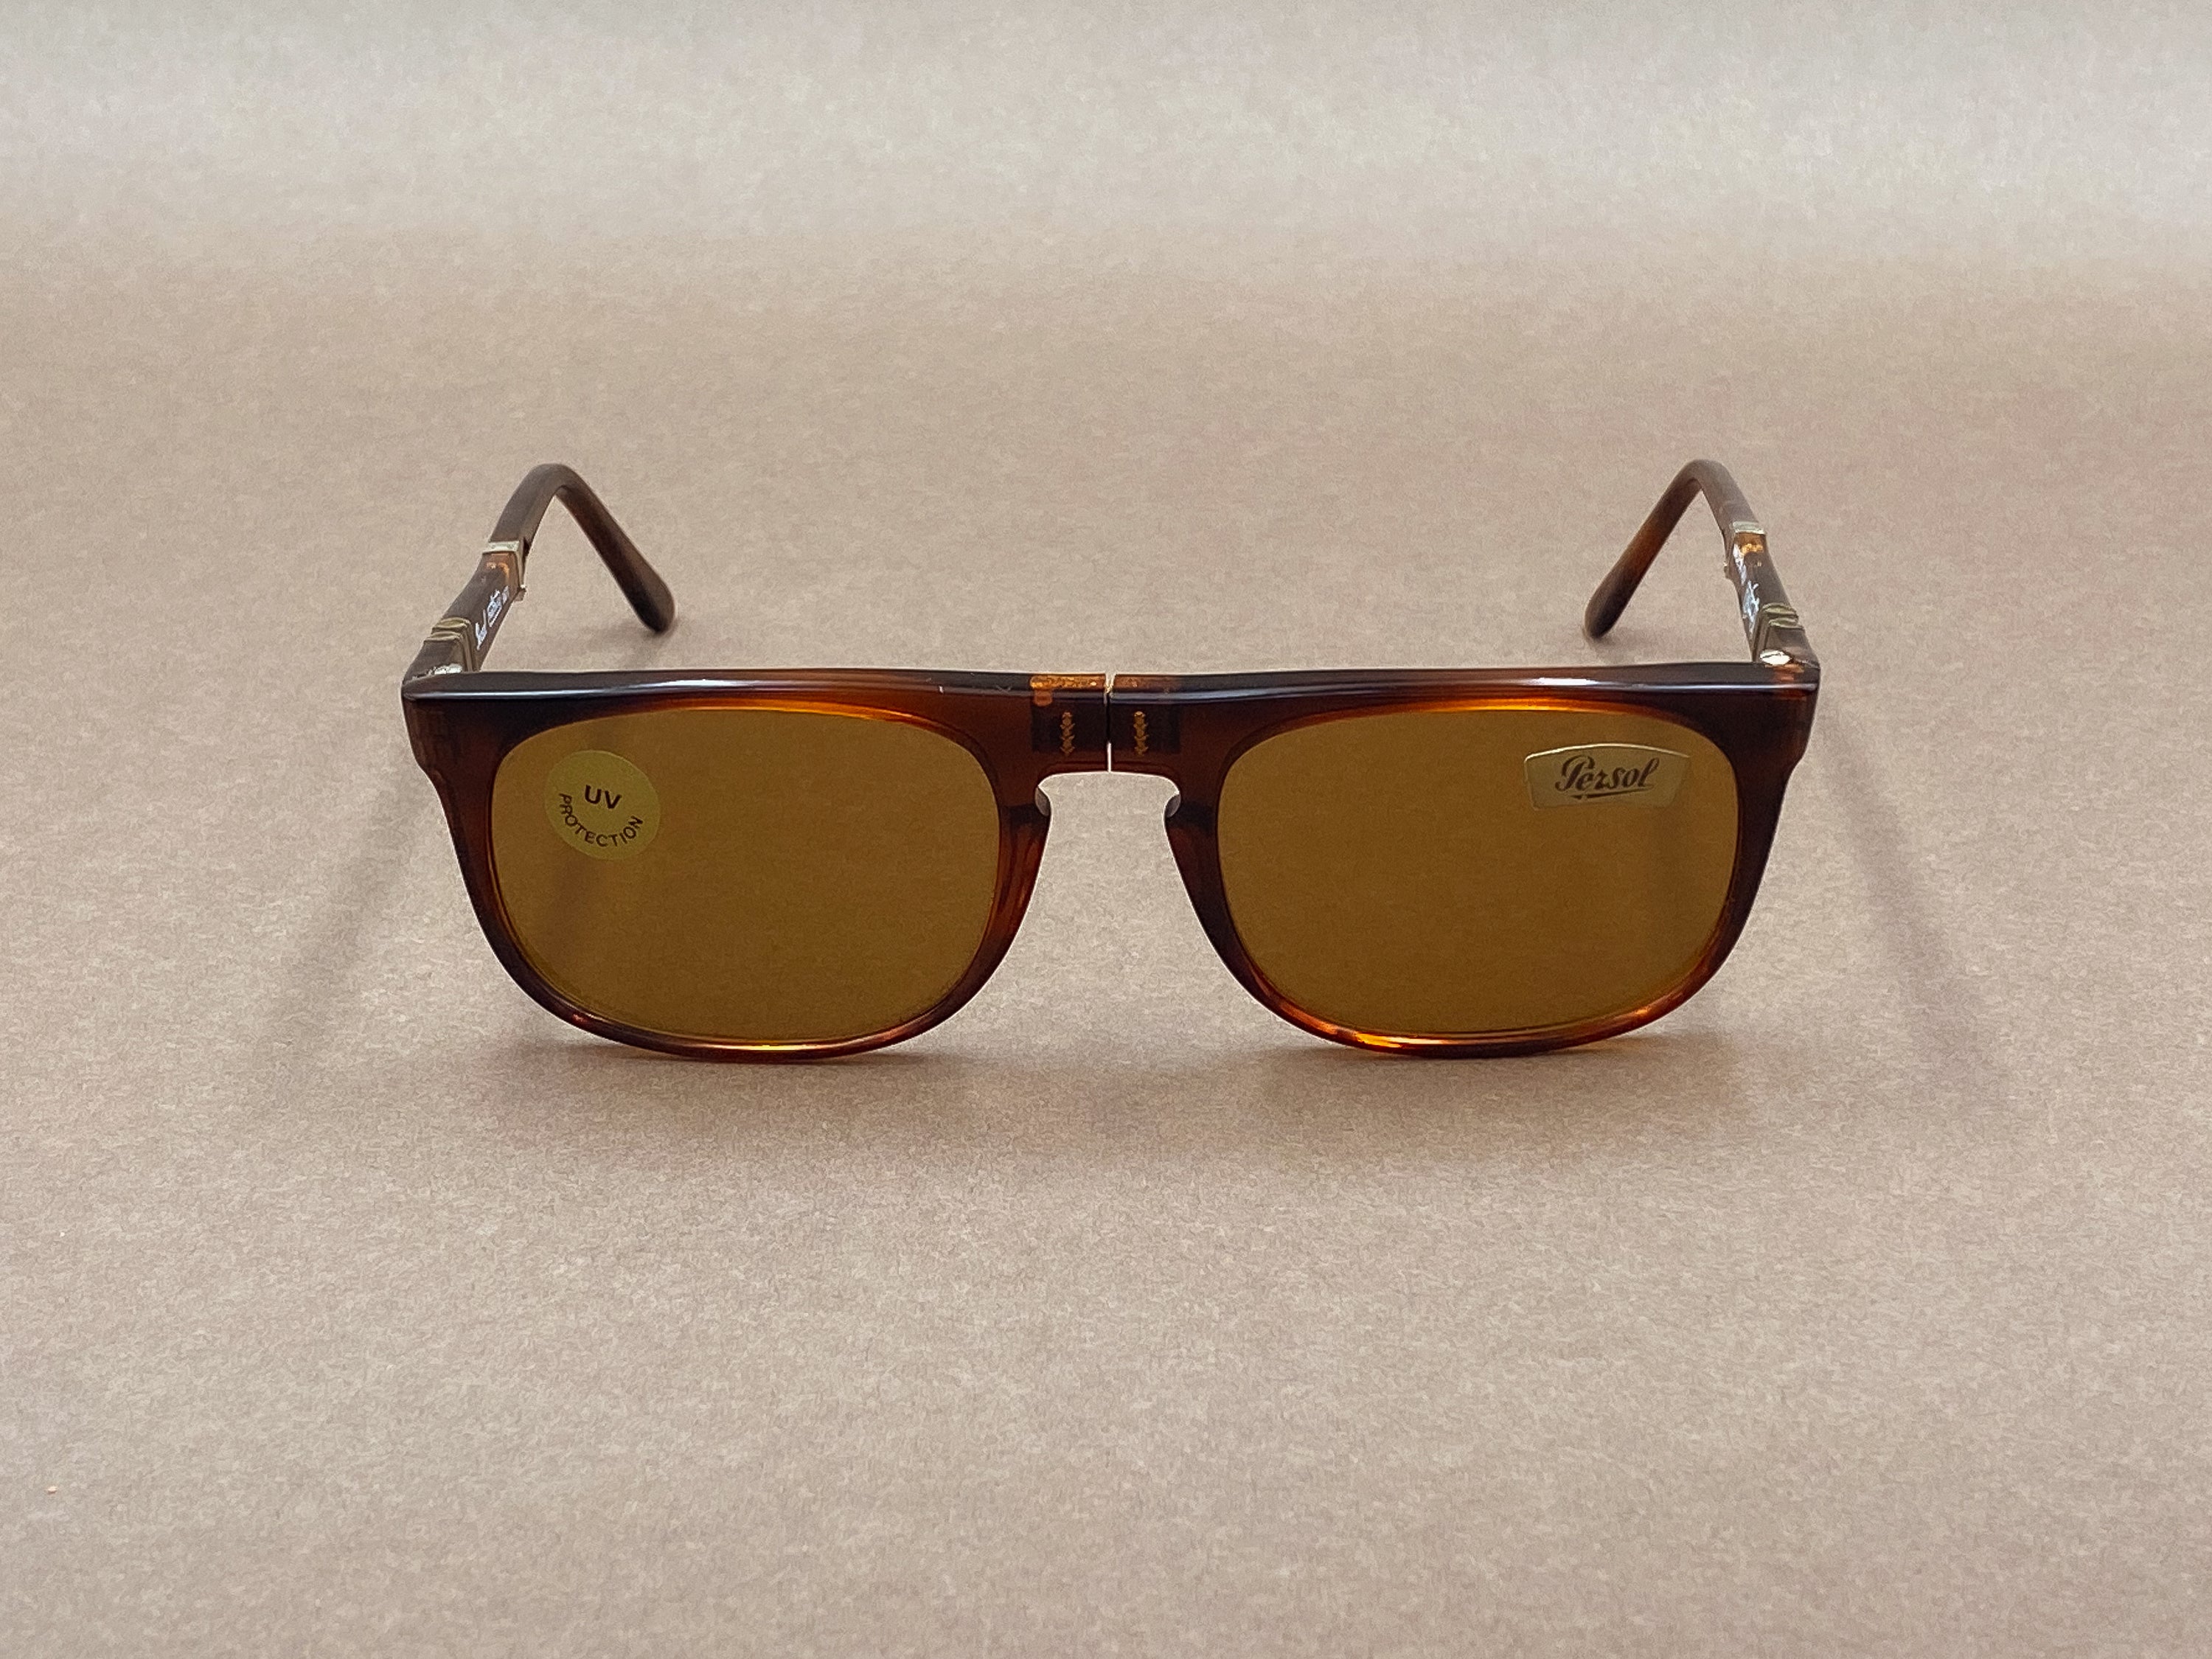 Persol Ratti 807 folding sunglasses